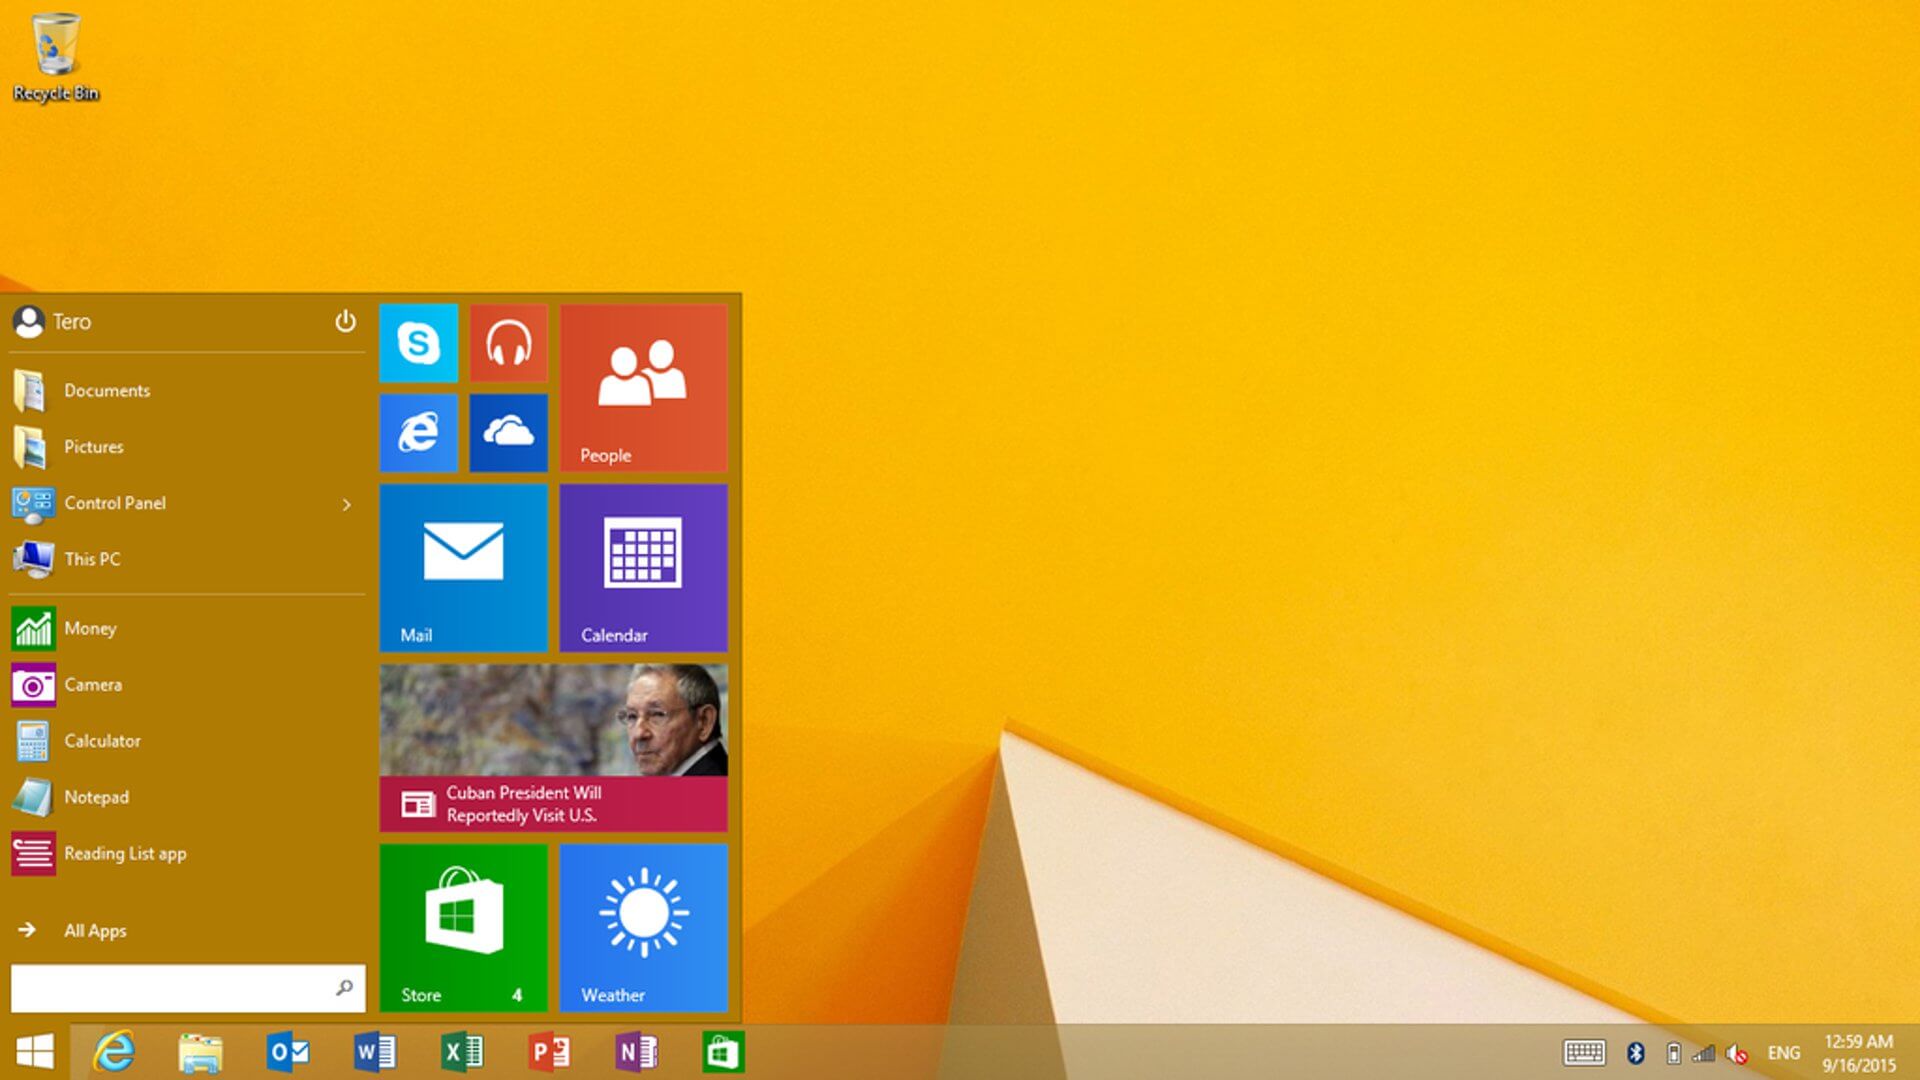 Windows 8.1 Start Menu